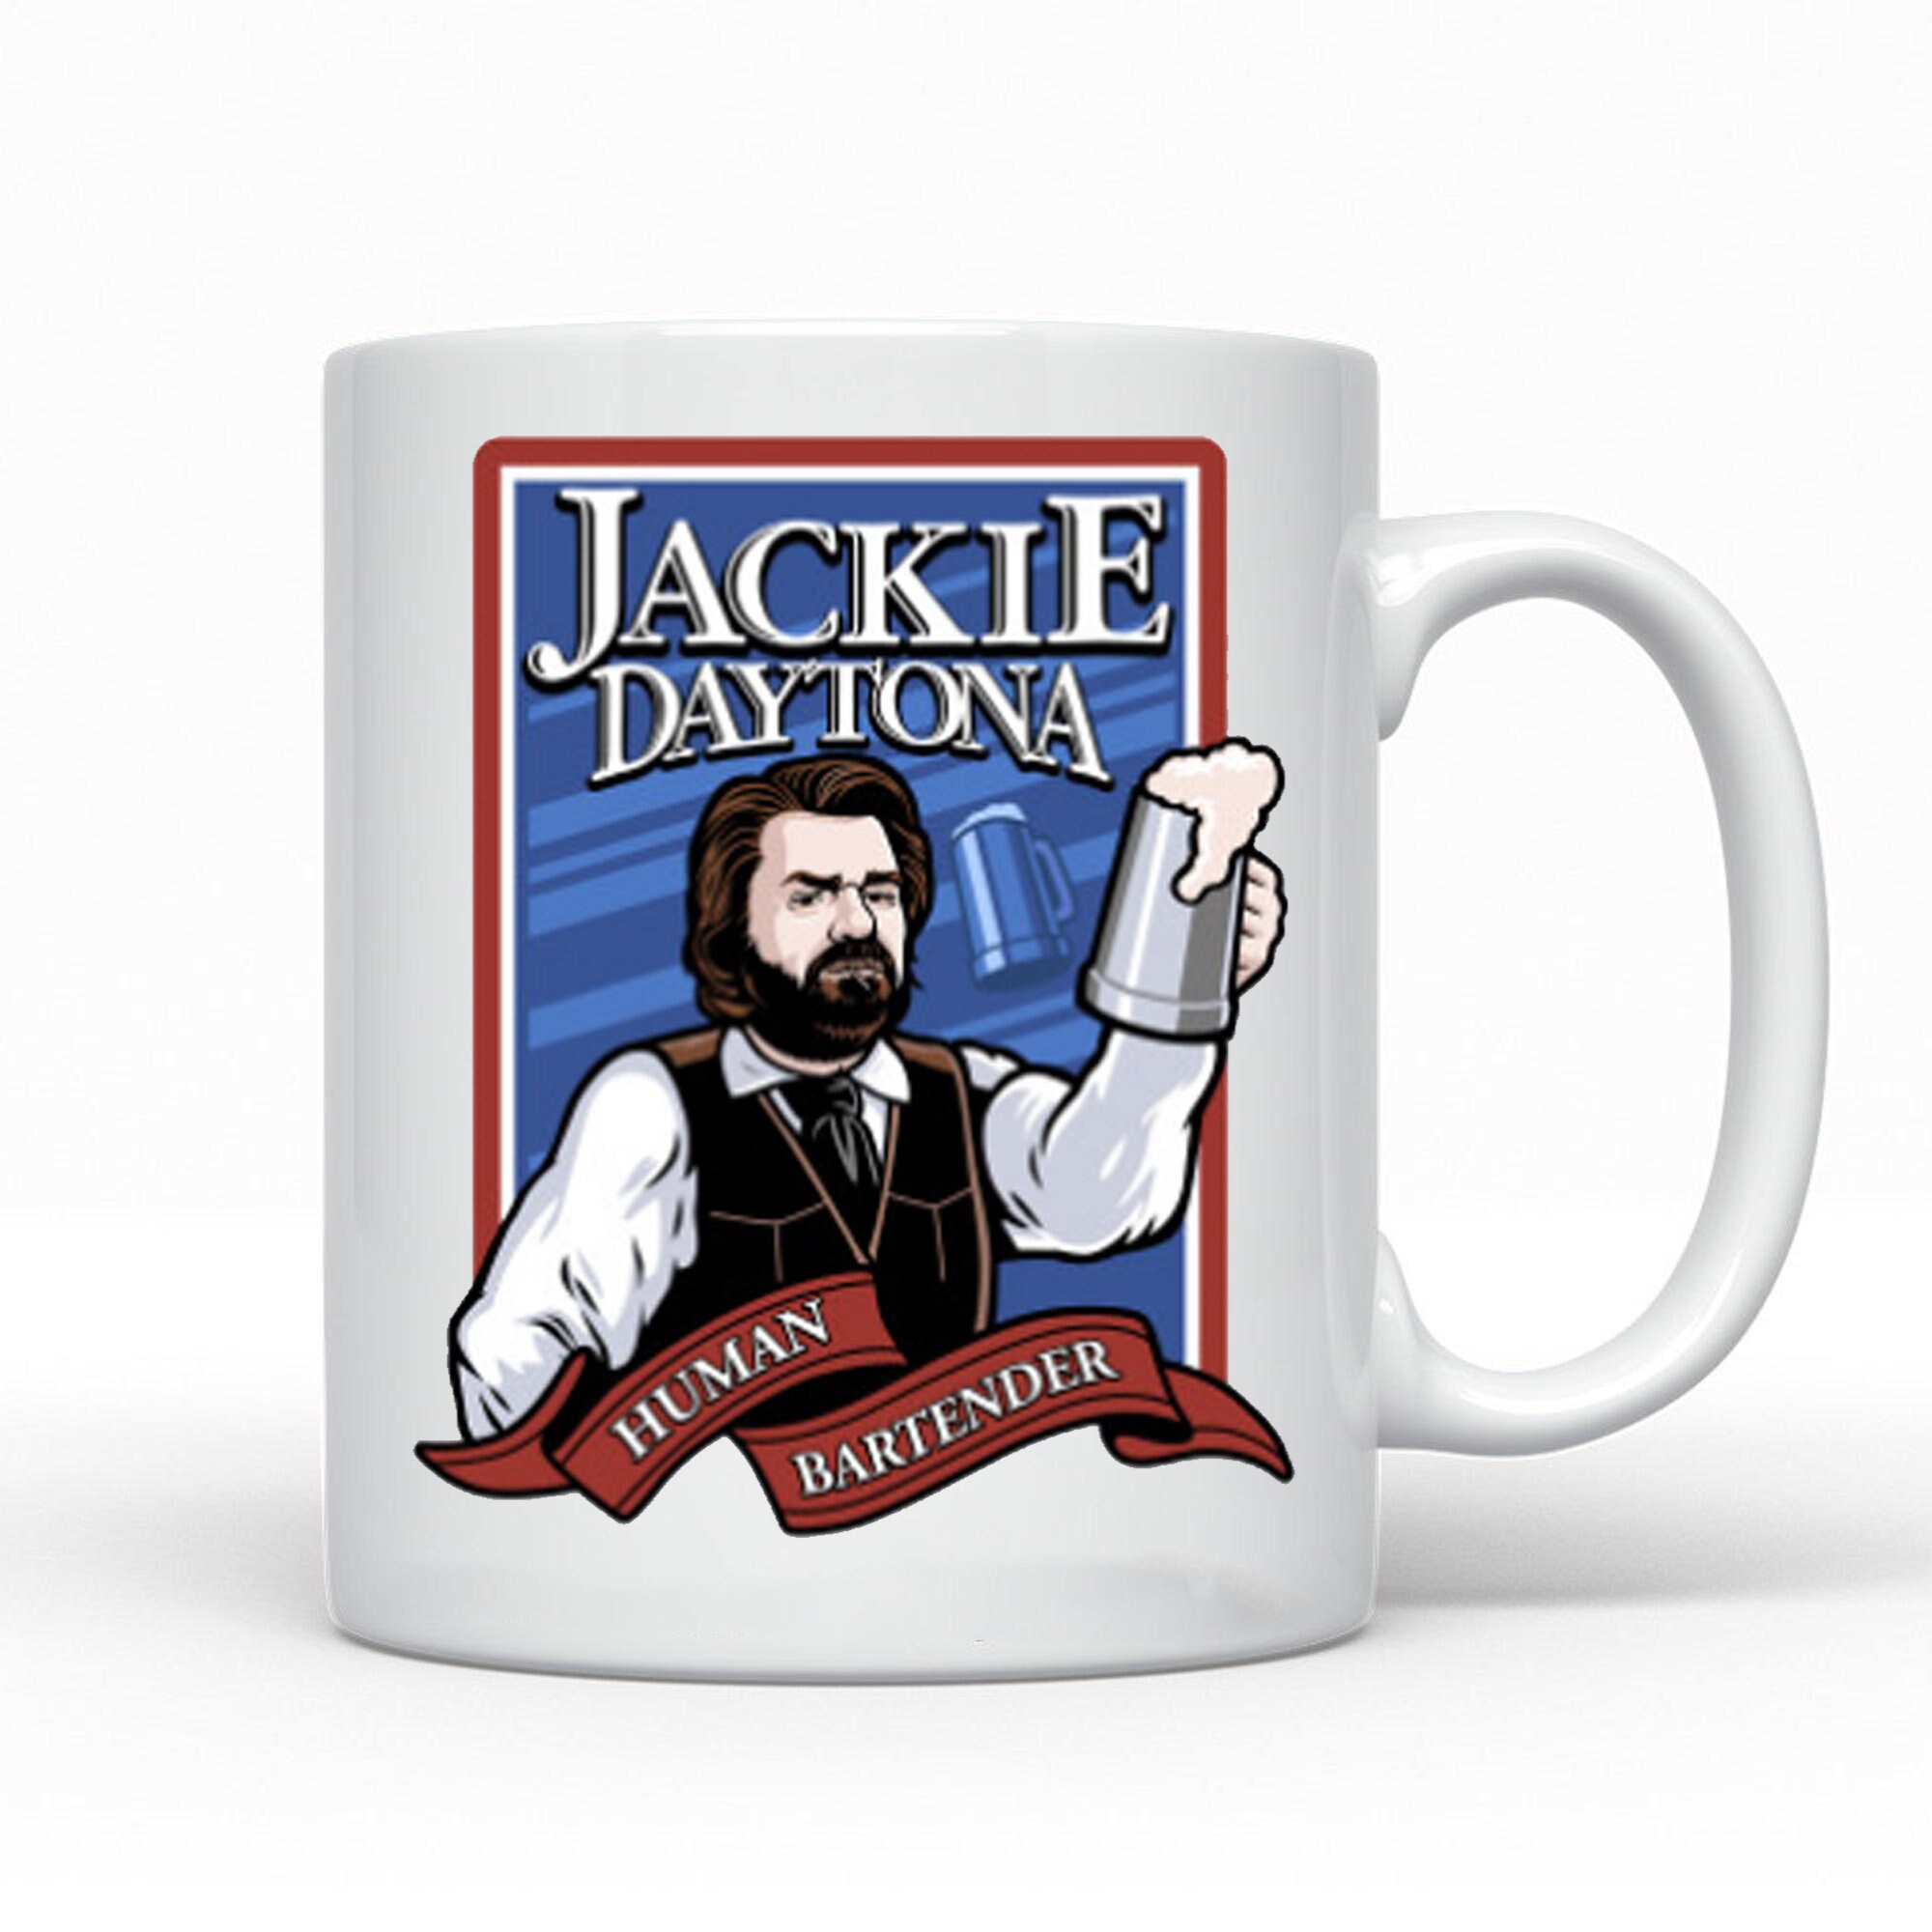 Discover Jackie Daytona Regular Human Bartender Mug